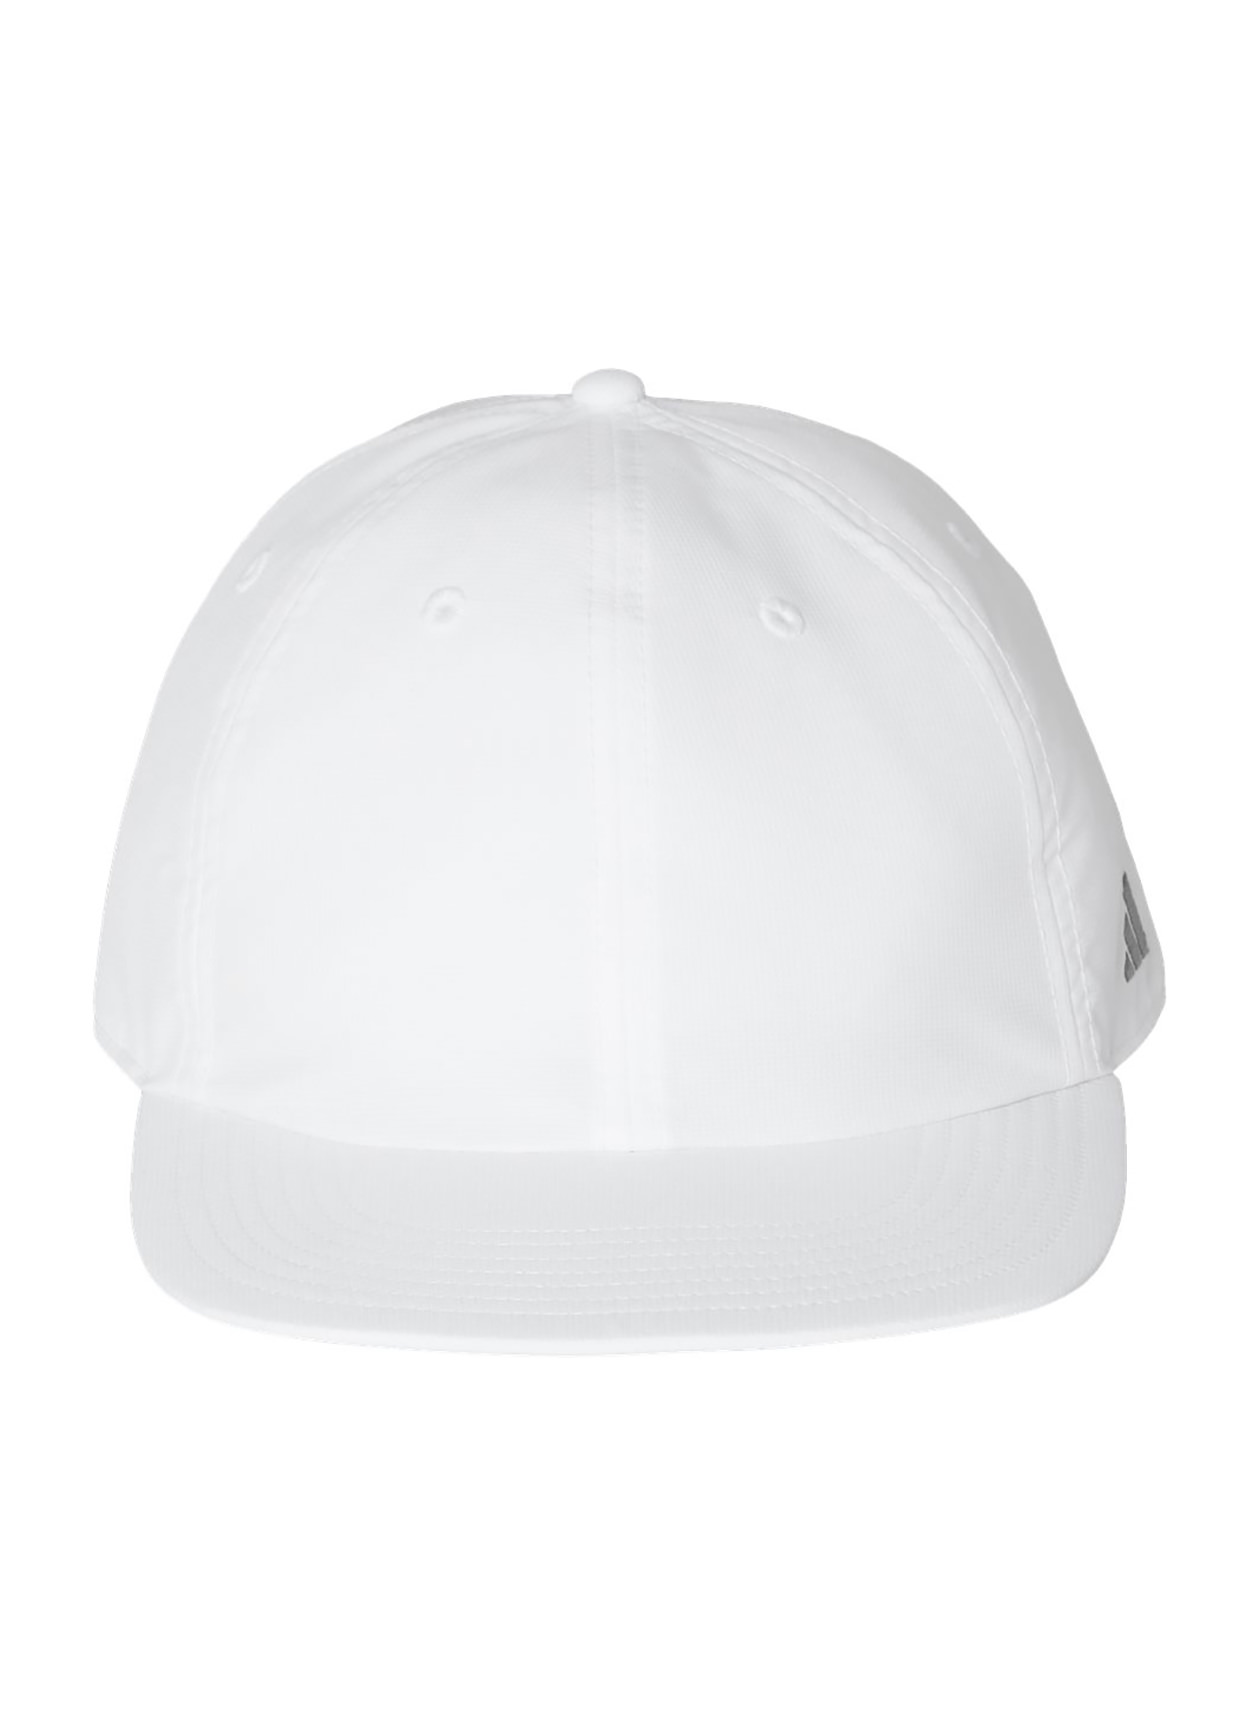 Corporate Adidas White Sustainable Performance Hat | Custom Company Hats